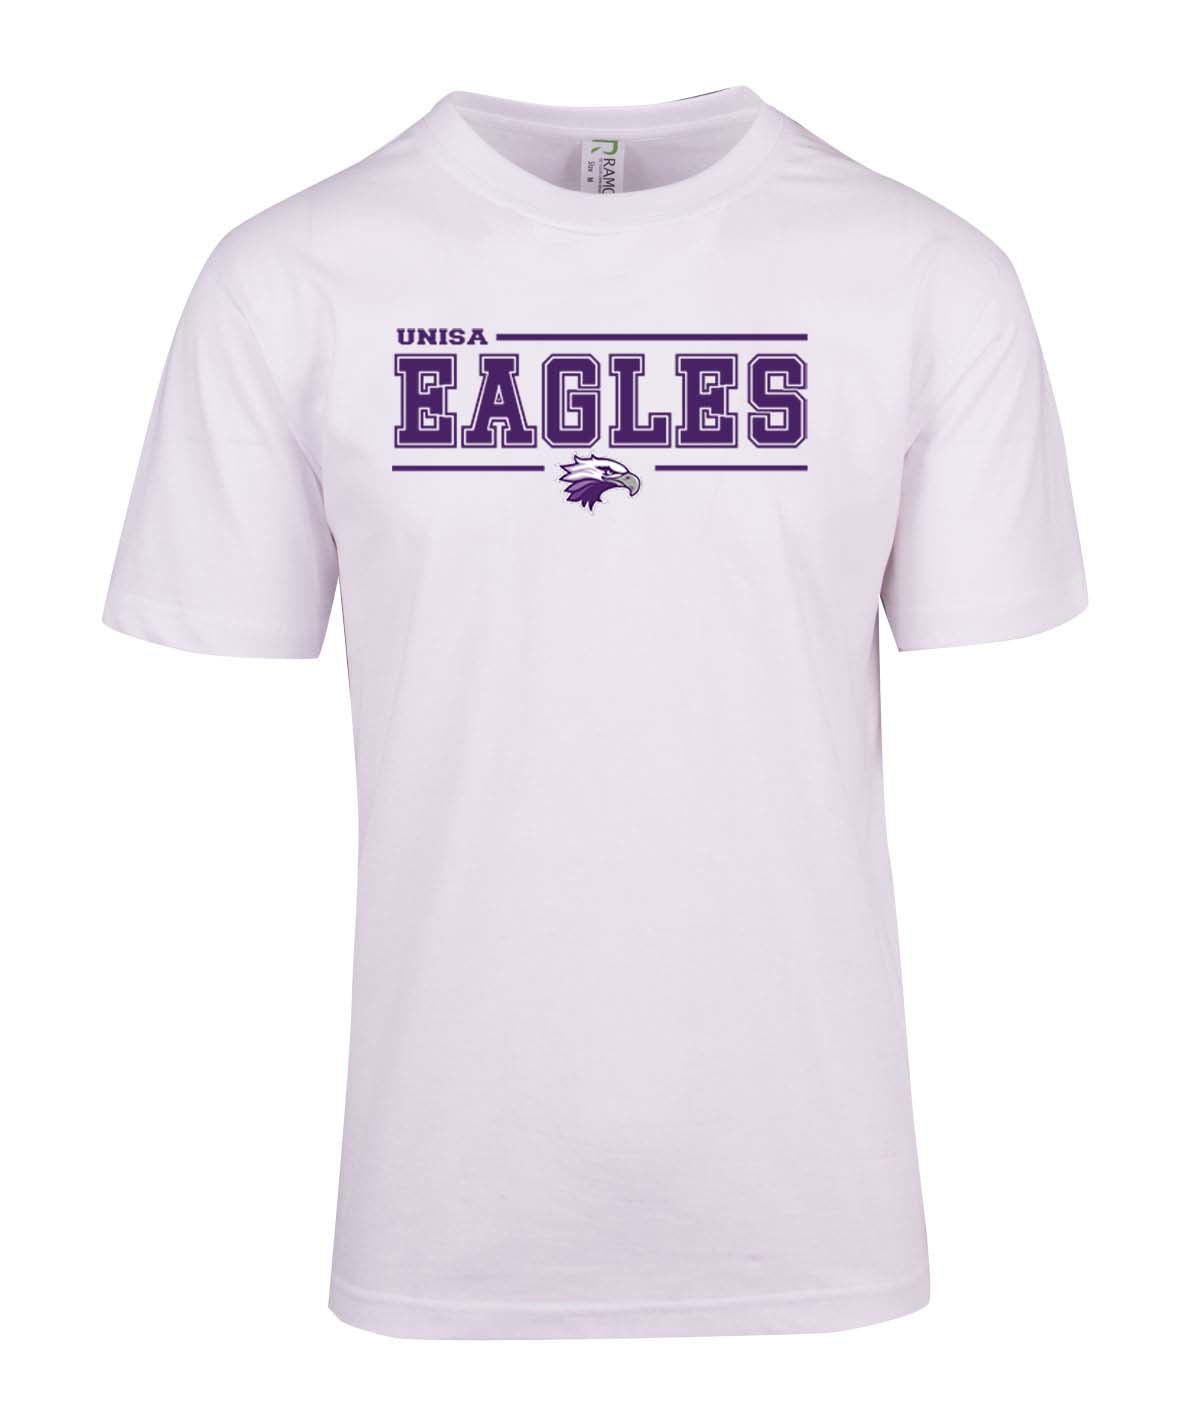 UniSA Eagles Straight Logo Gridiron T-Shirt